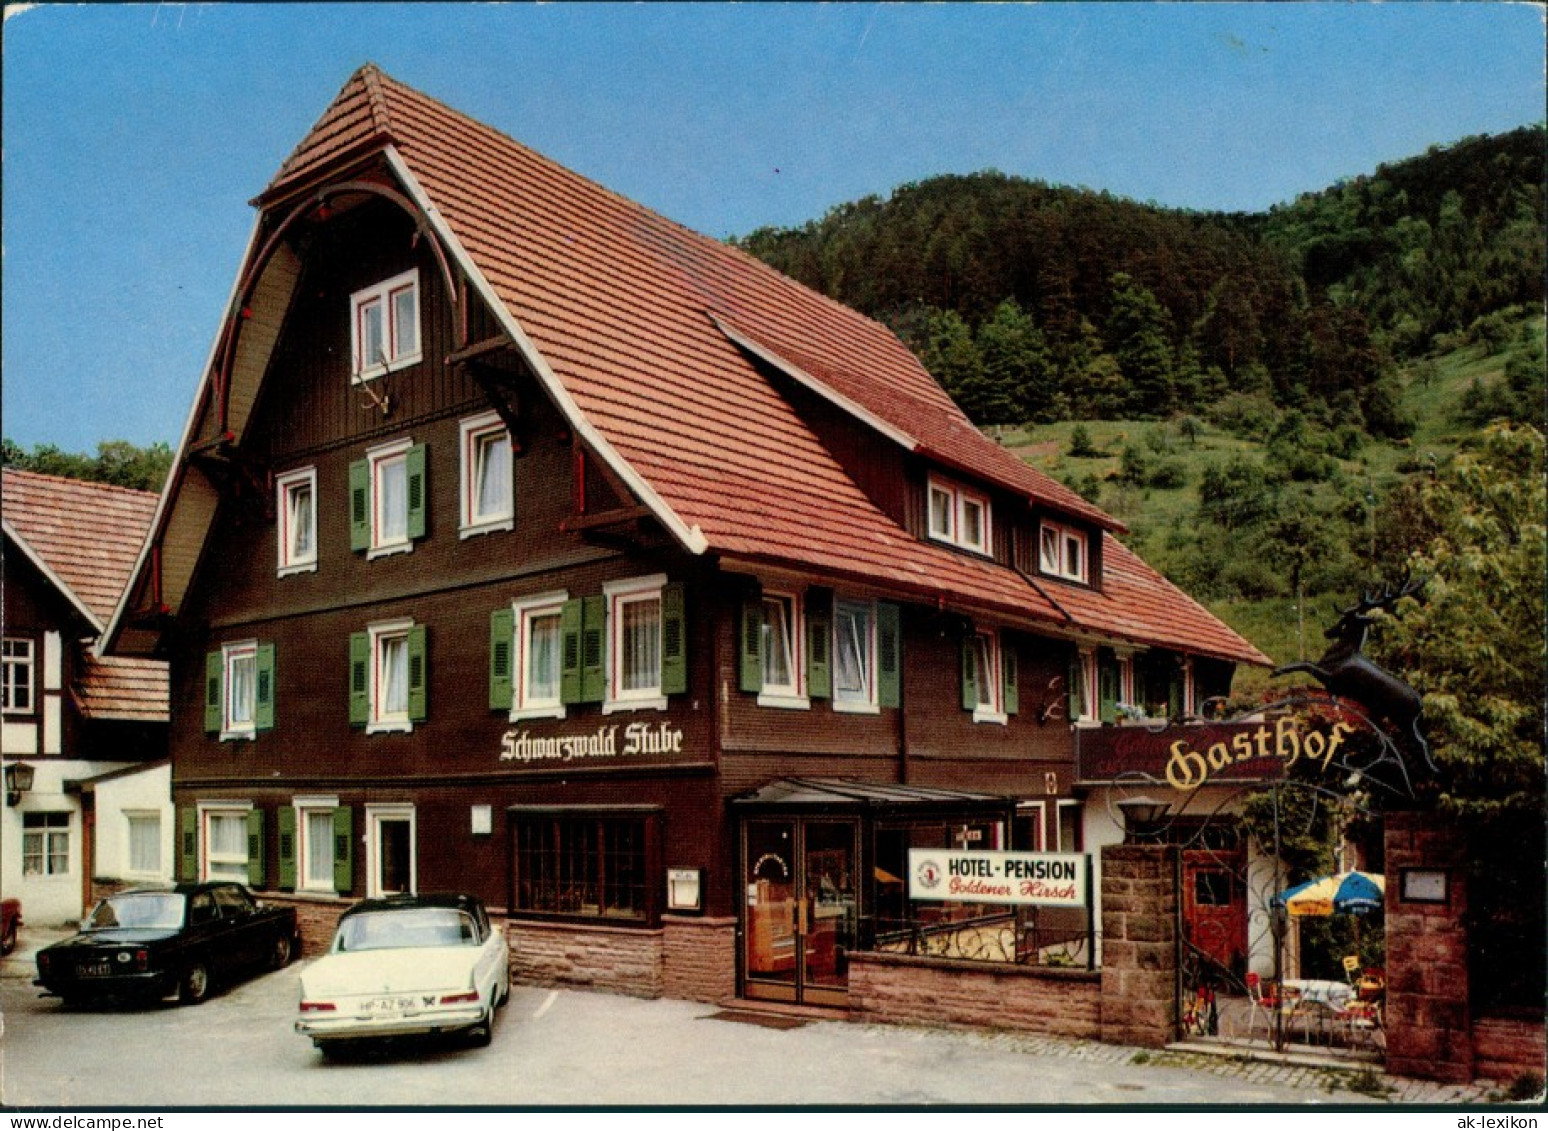 Ansichtskarte Forbach (Baden) Hotel - Restaurant Goldener Hirsch 1970 - Forbach